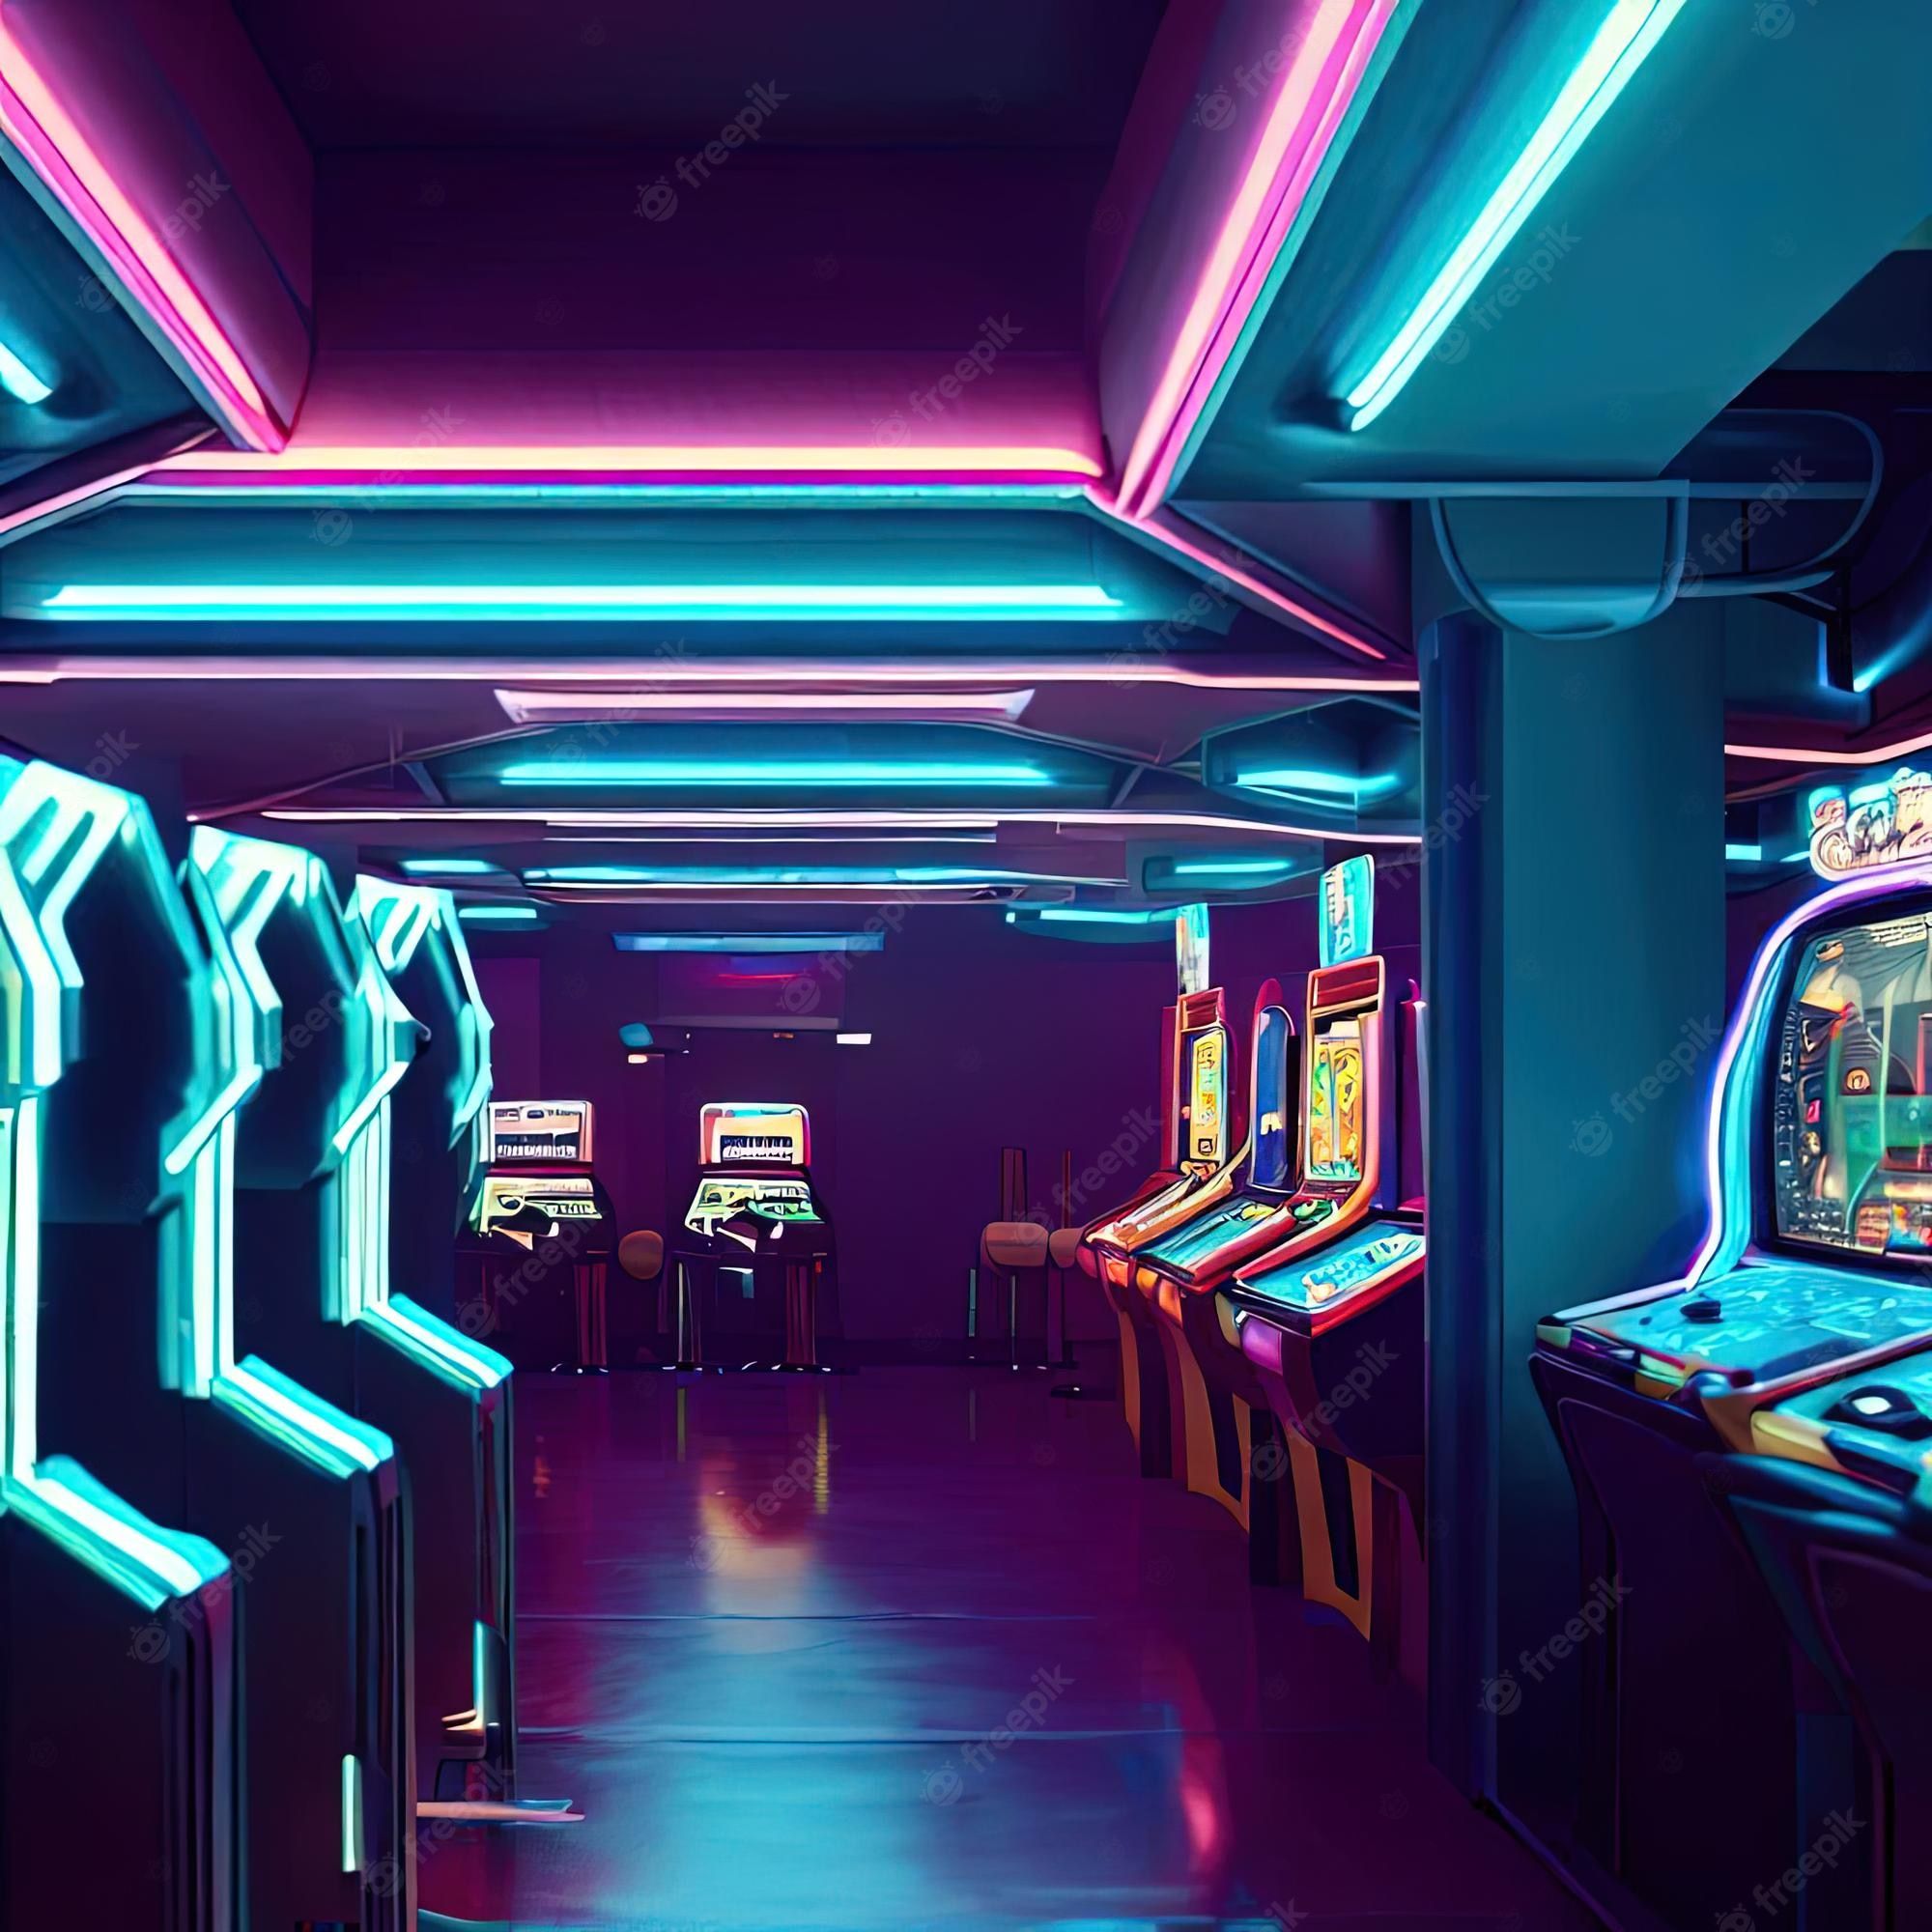 Arcade Room Image